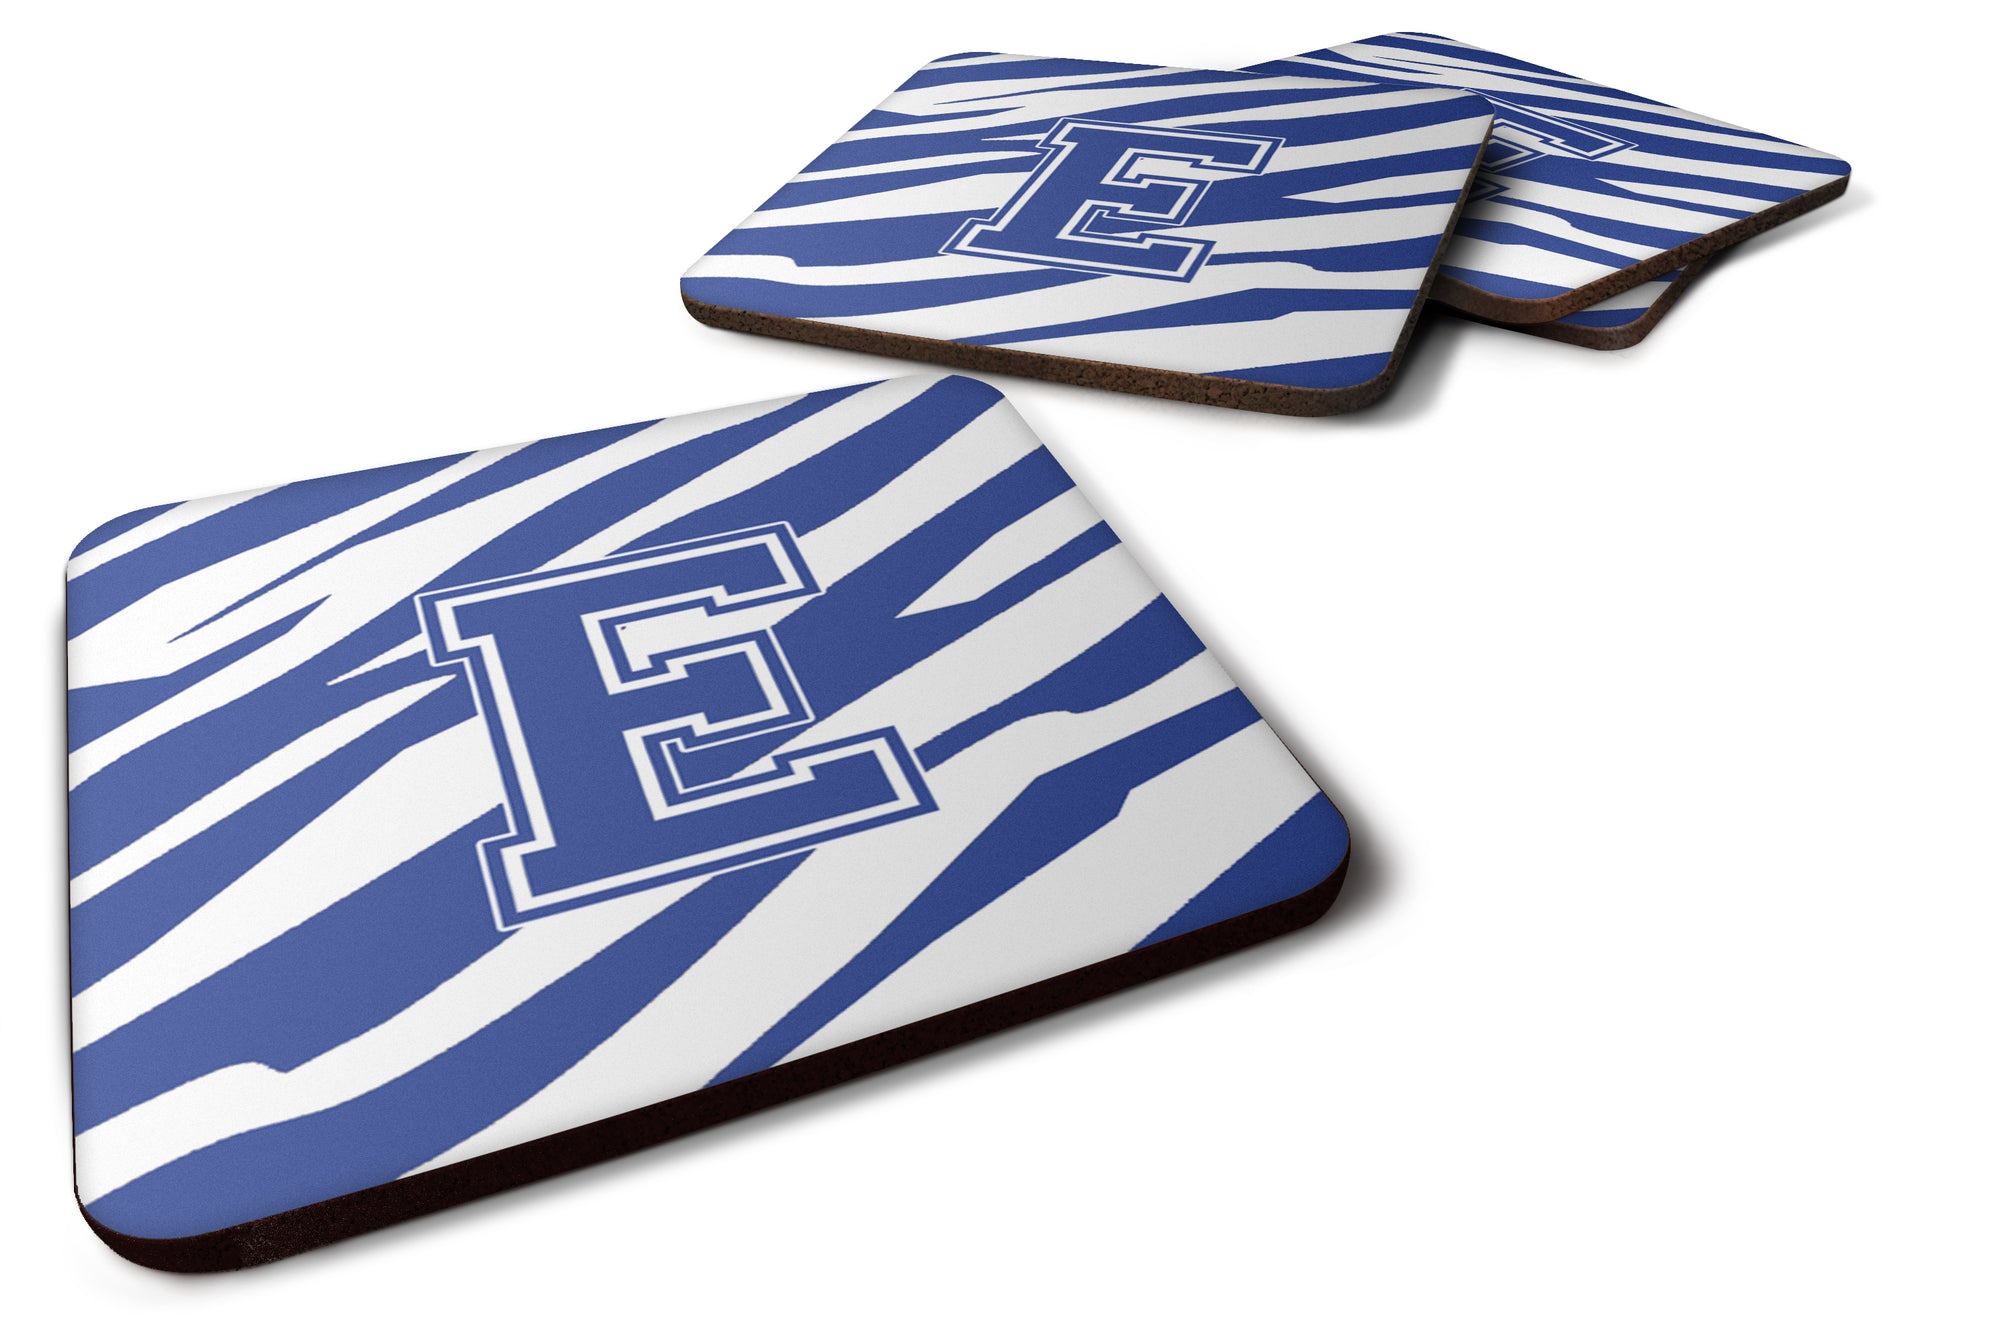 Set of 4 Monogram - Tiger Stripe Blue and White Foam Coasters Initial Letter E - the-store.com